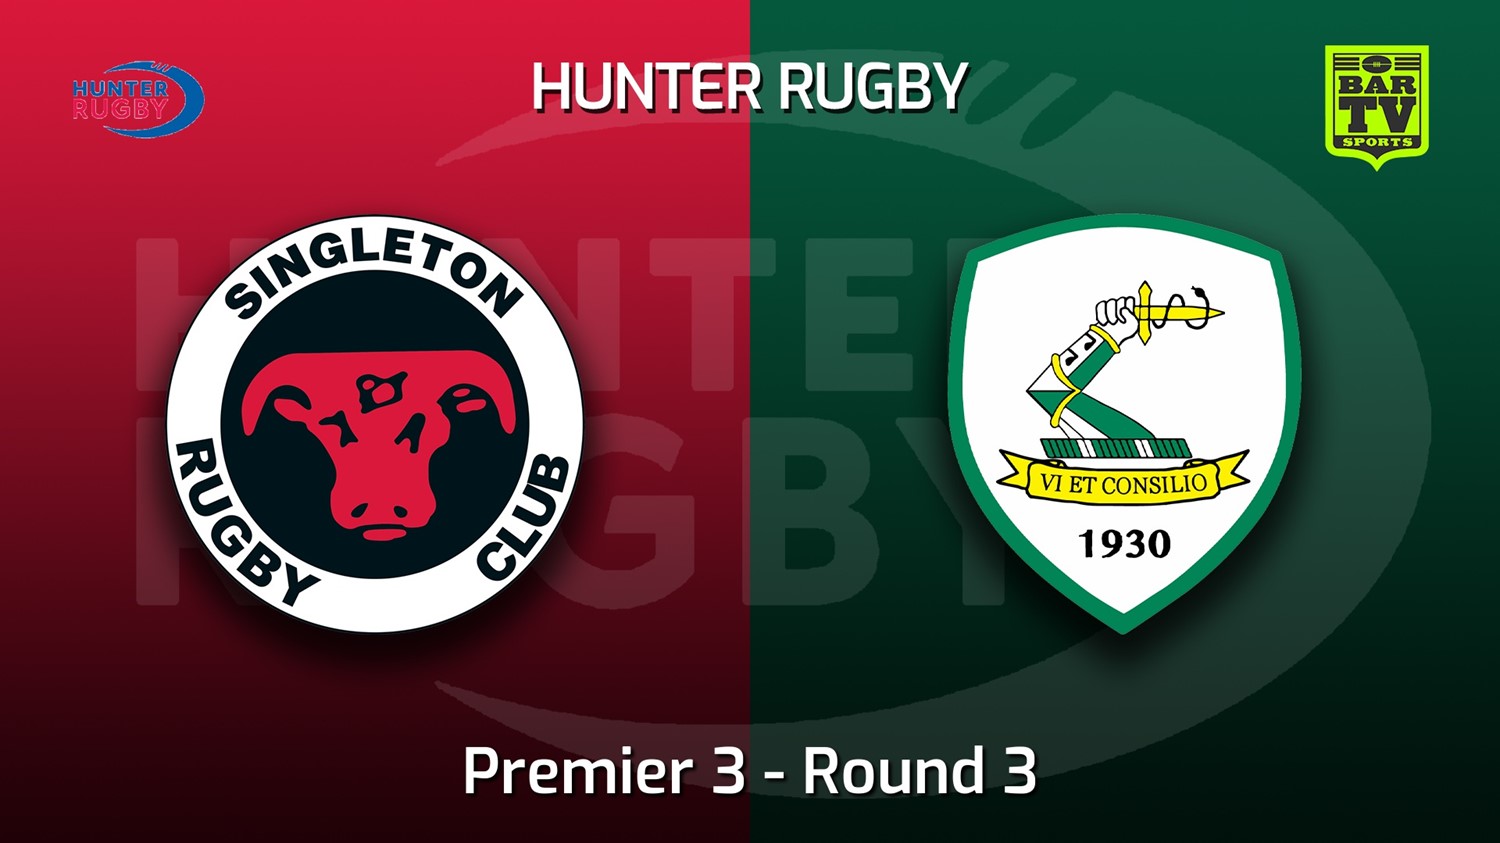 220507-Hunter Rugby Round 3 - Premier 3 - Singleton Bulls v Merewether Carlton Slate Image